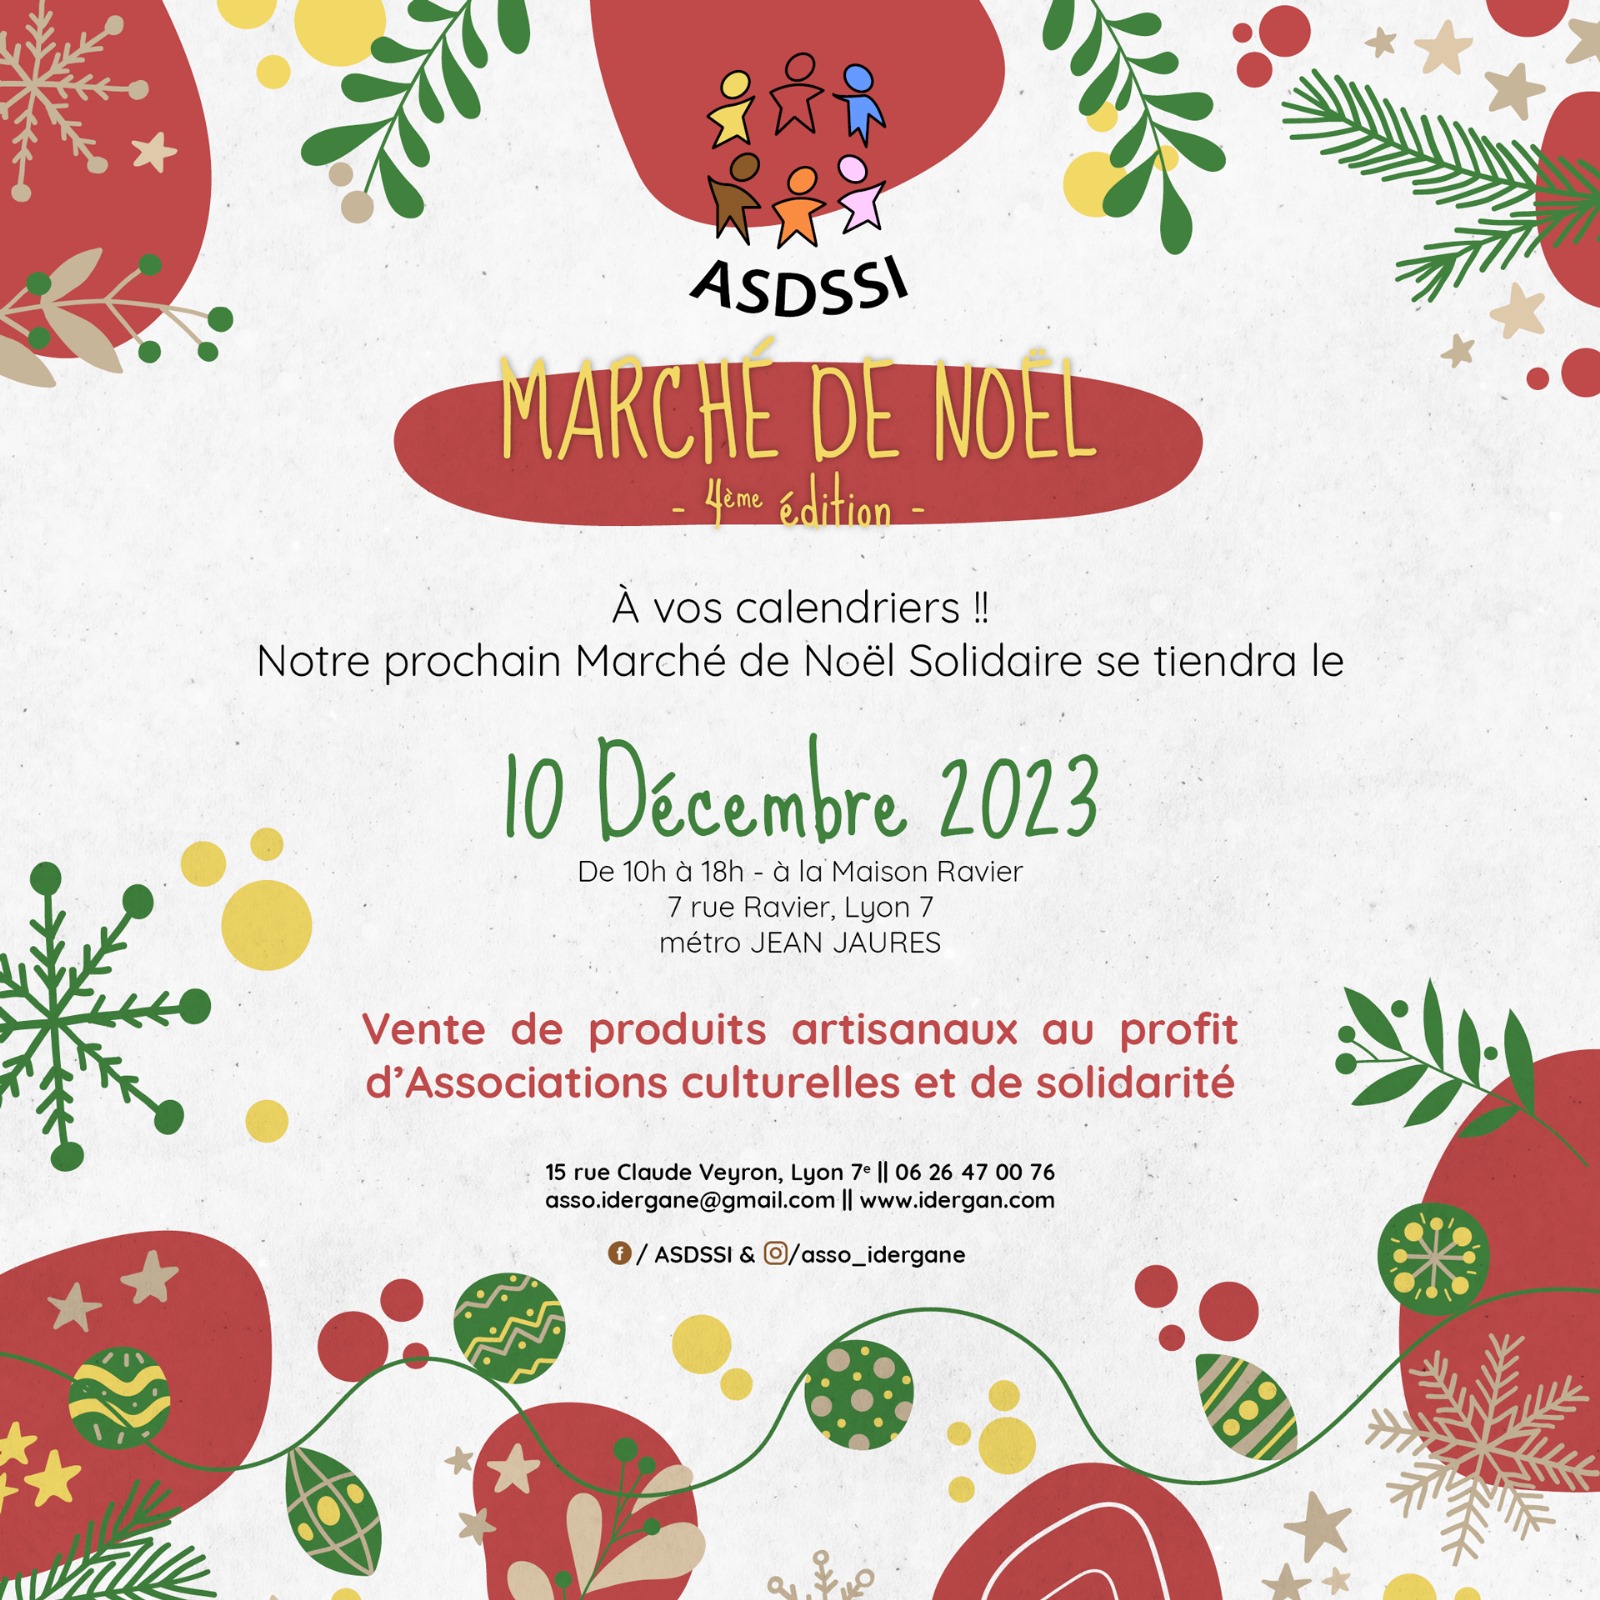 Marché de Noël solidaire organisé par l'ASDSSI